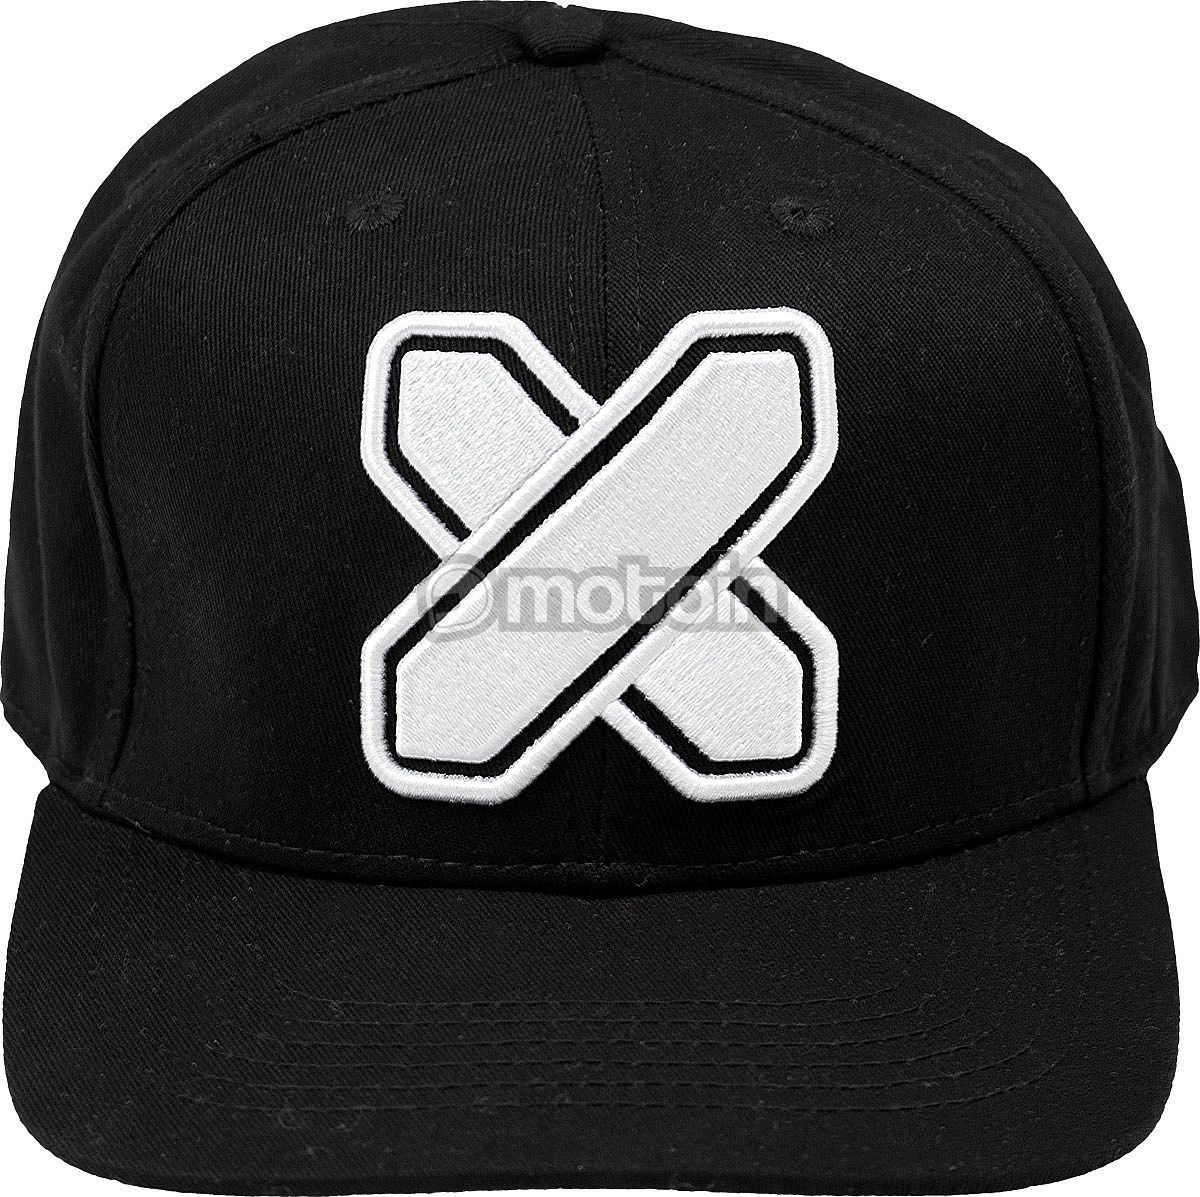 Shoei Logo X, tampa